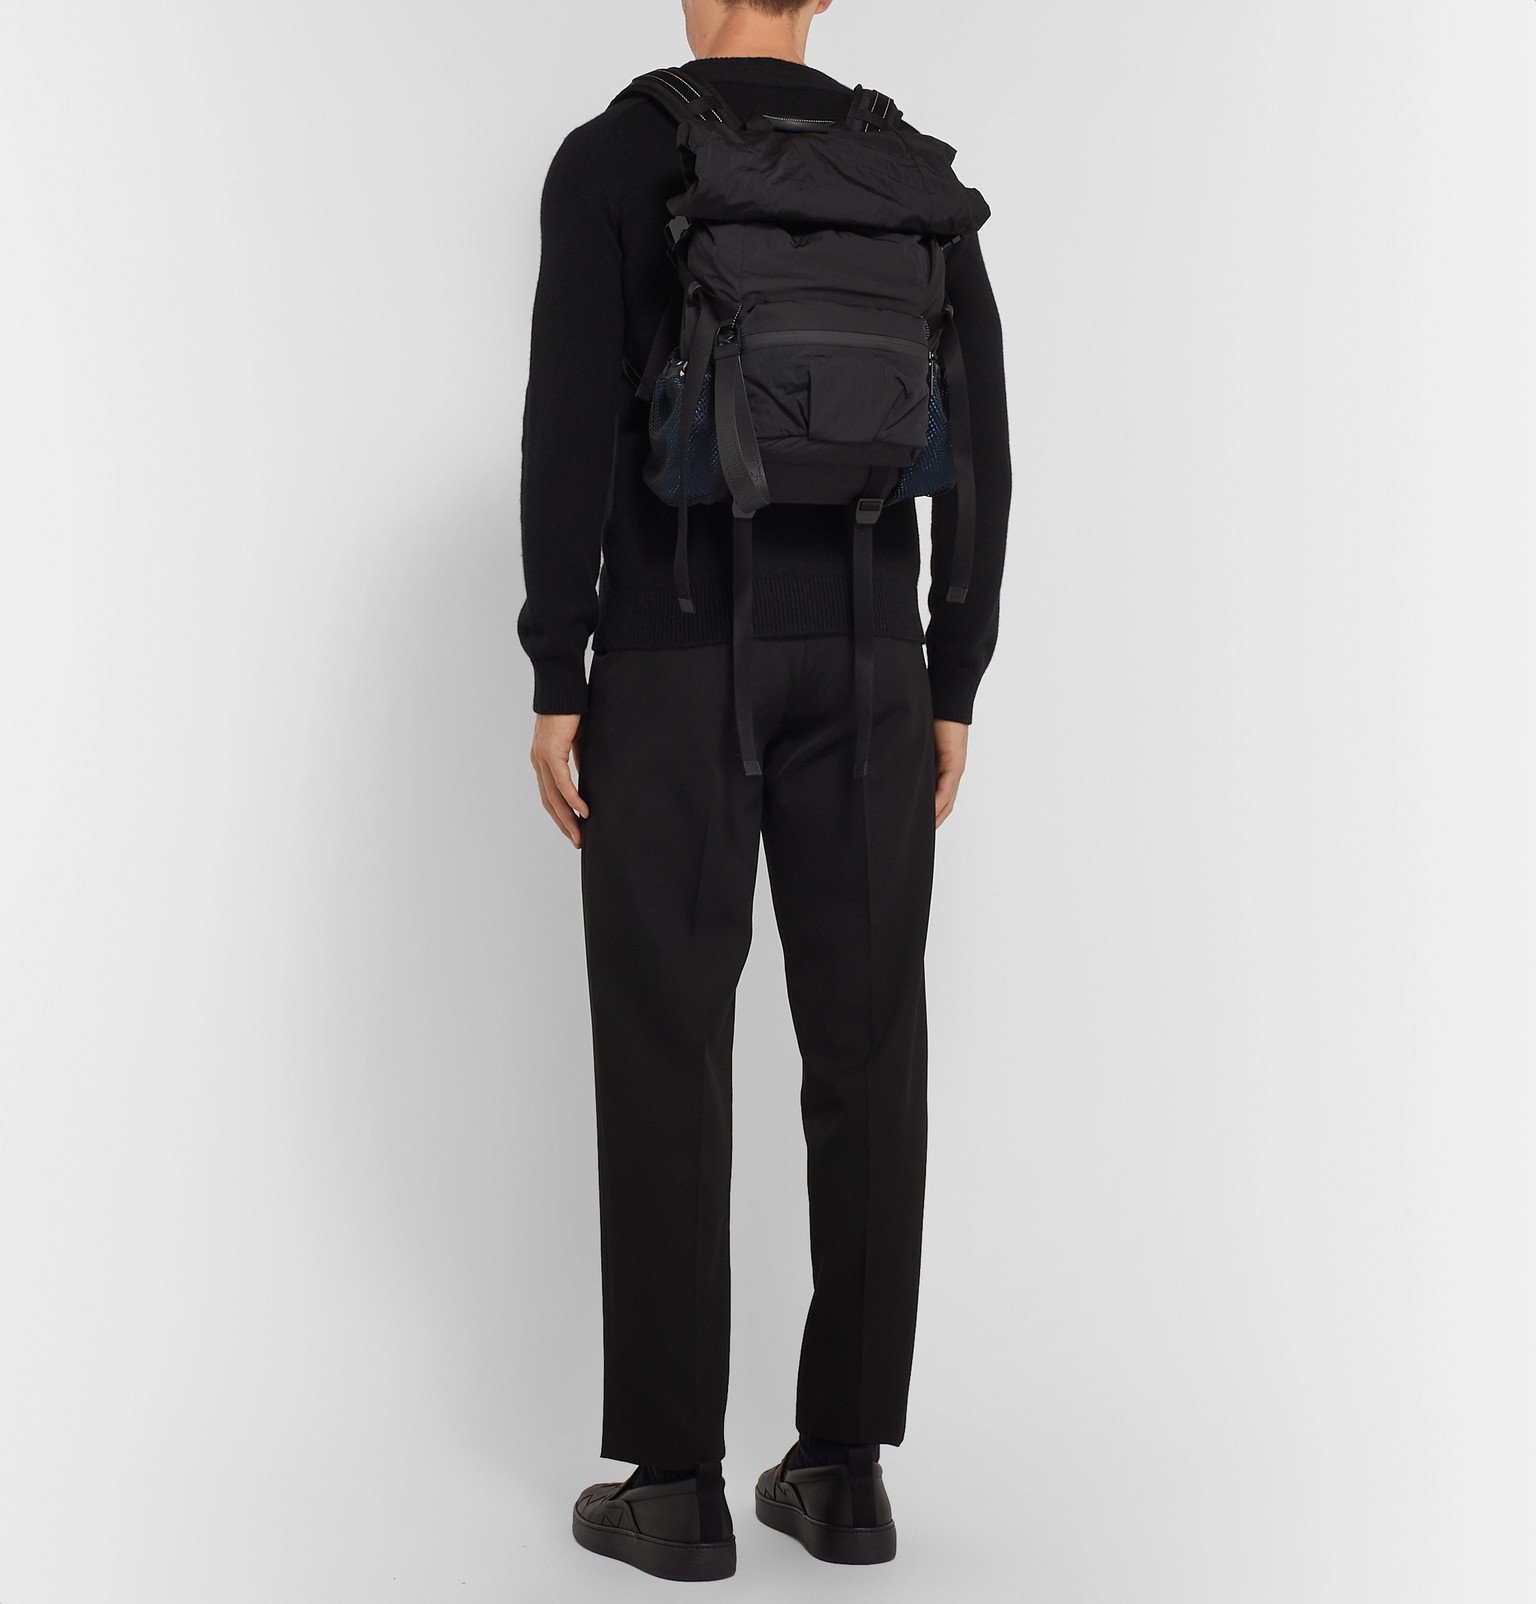 Bottega Veneta - Leather-Trimmed Nylon Backpack - Black Bottega Veneta